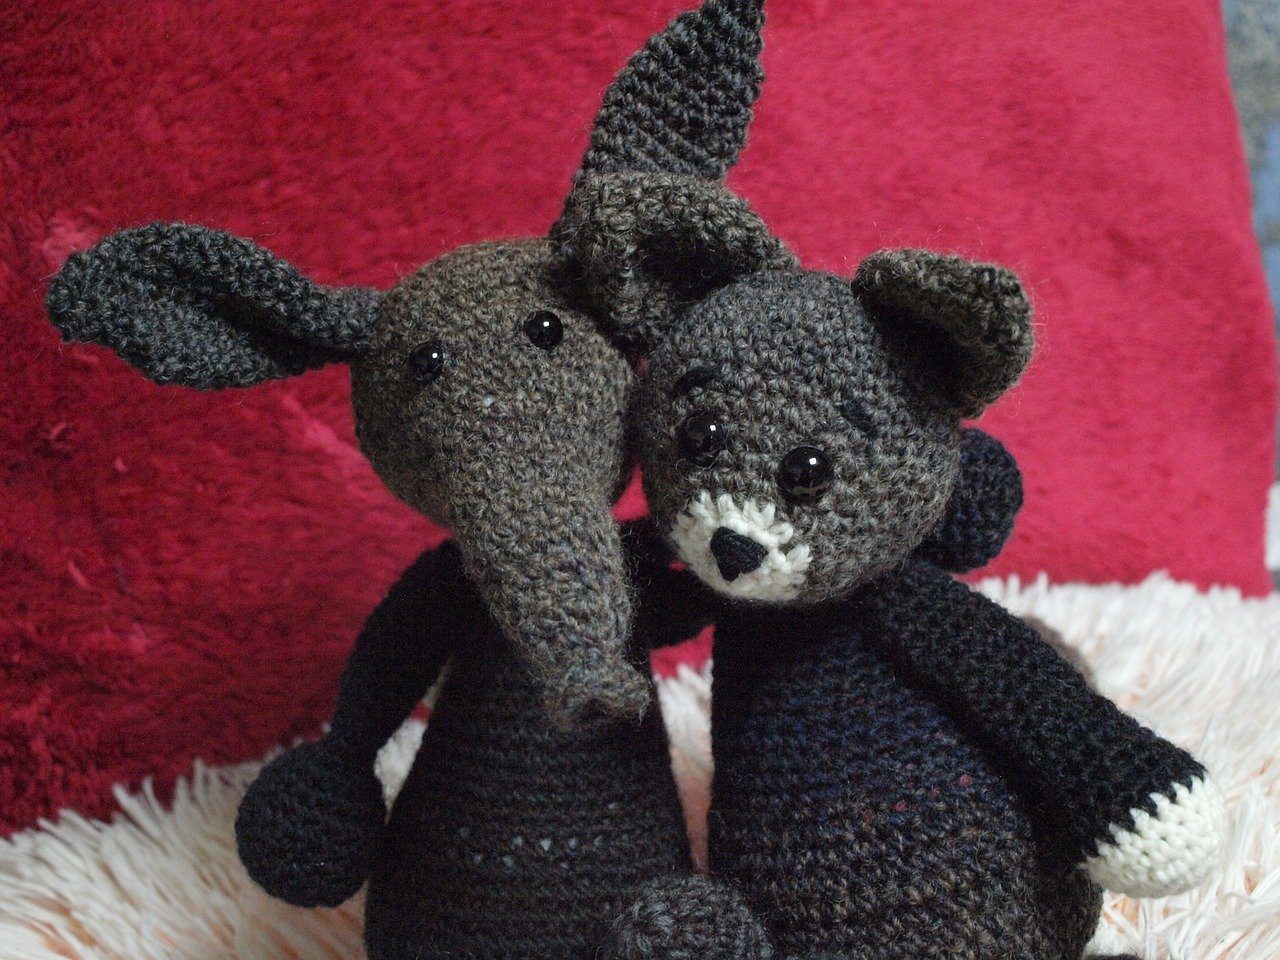 Aardvark and cat stuffed animals are friends